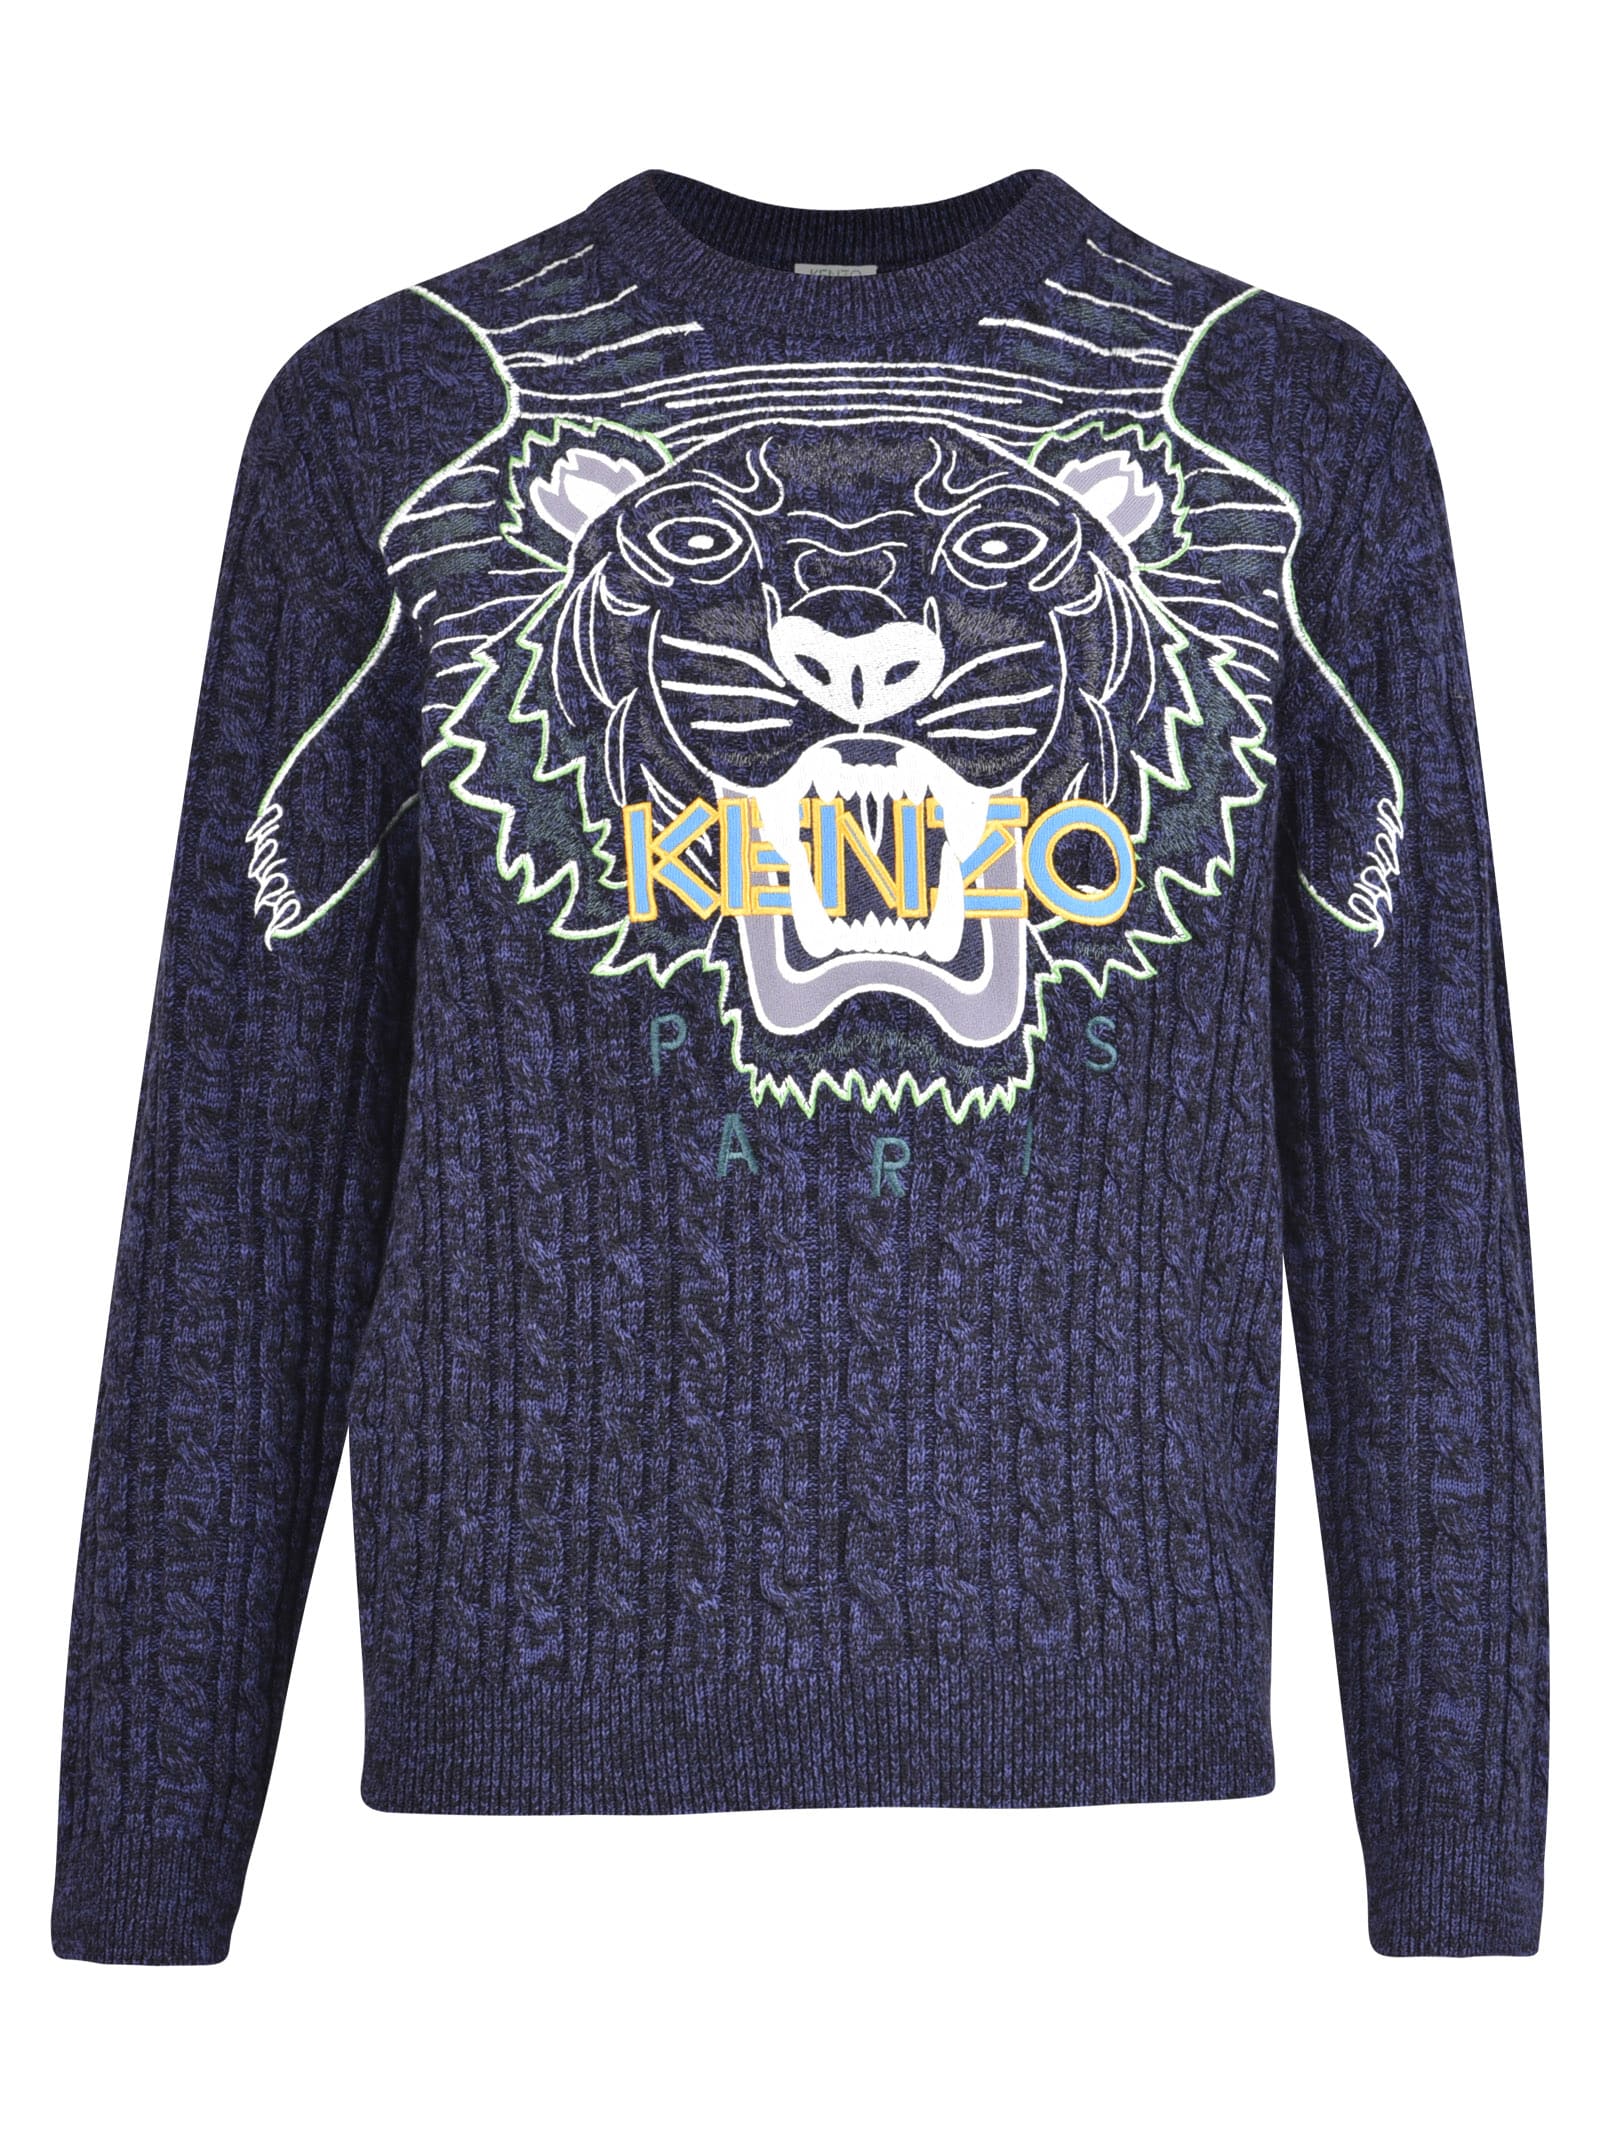 Kenzo Sweaters | italist, ALWAYS LIKE A 